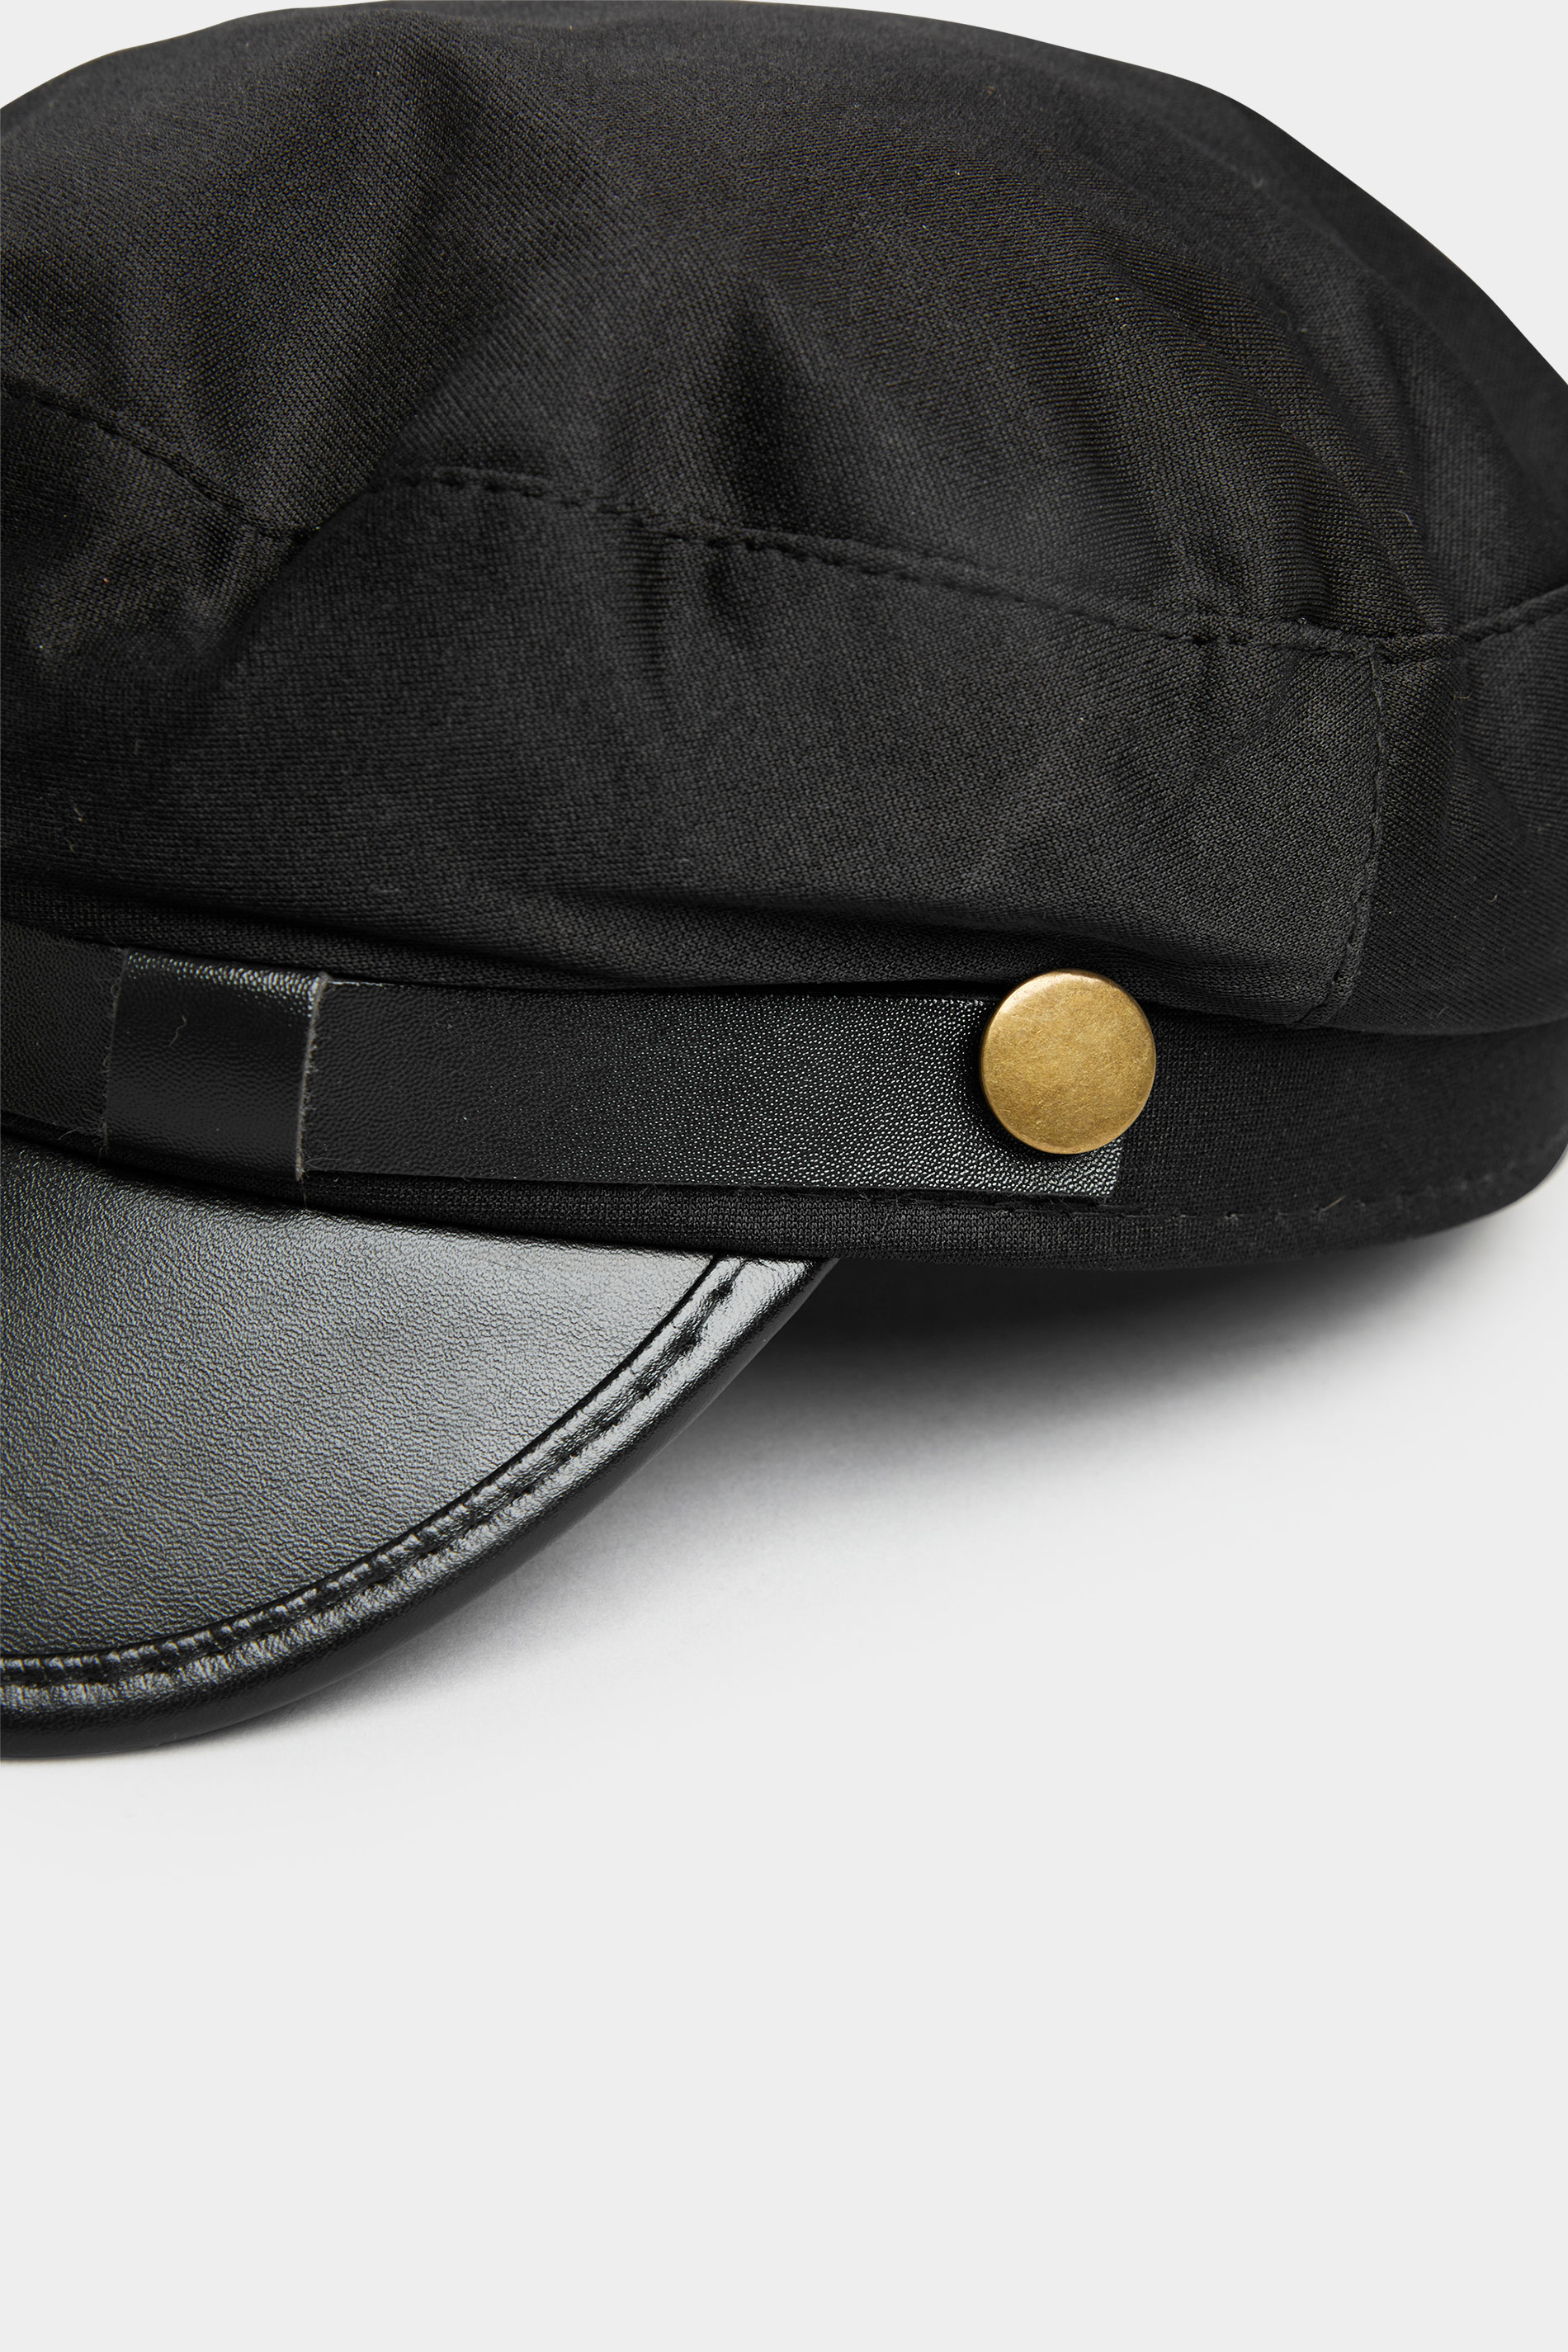 Black Faux Leather Peak Baker Boy Hat | Yours Clothing 3